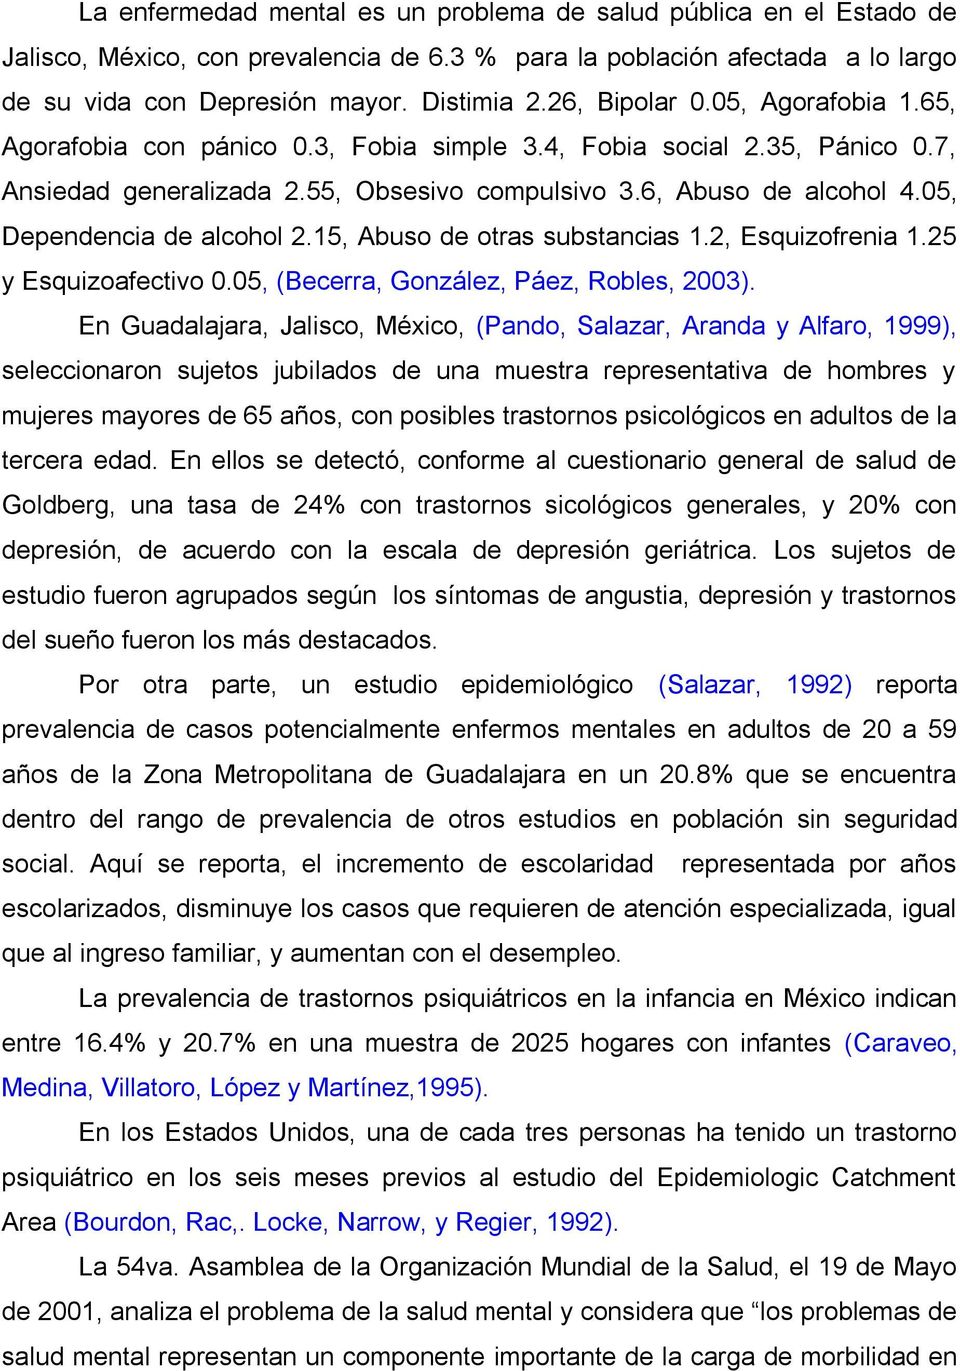 05, Dependencia de alcohol 2.15, Abuso de otras substancias 1.2, Esquizofrenia 1.25 y Esquizoafectivo 0.05, (Becerra, González, Páez, Robles, 2003).